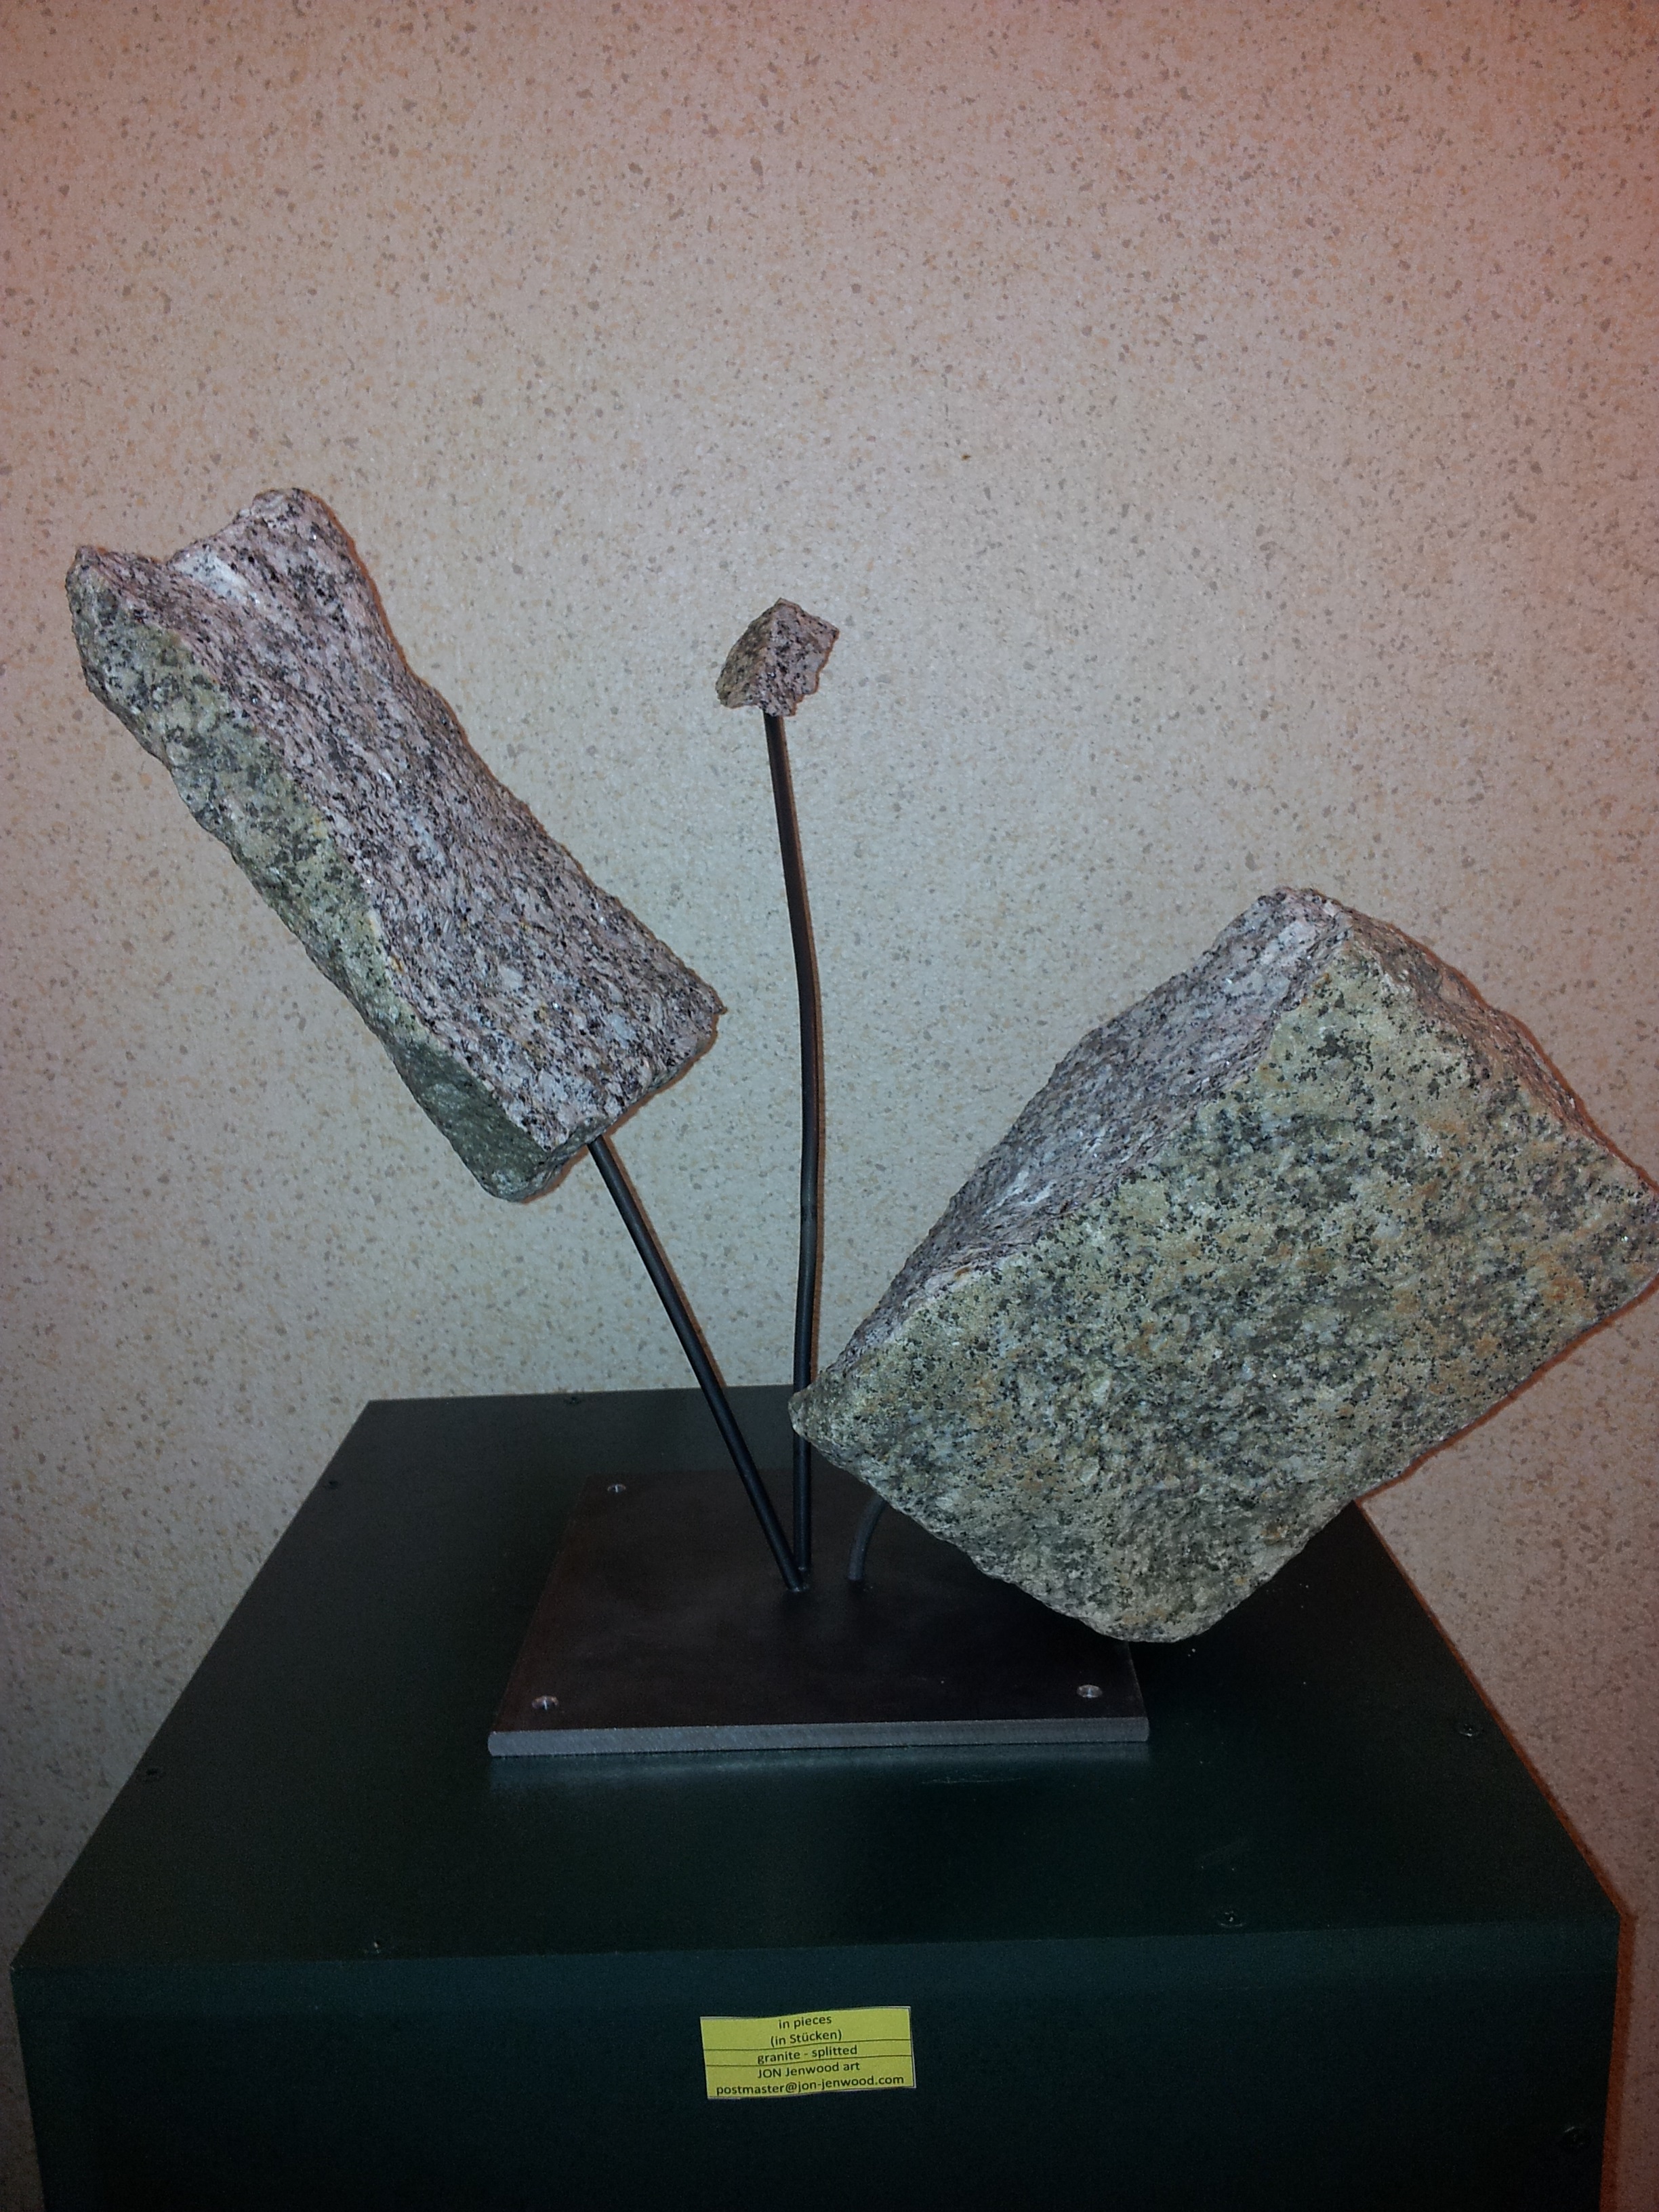 in pieces (in Stücken)
granite - splitted